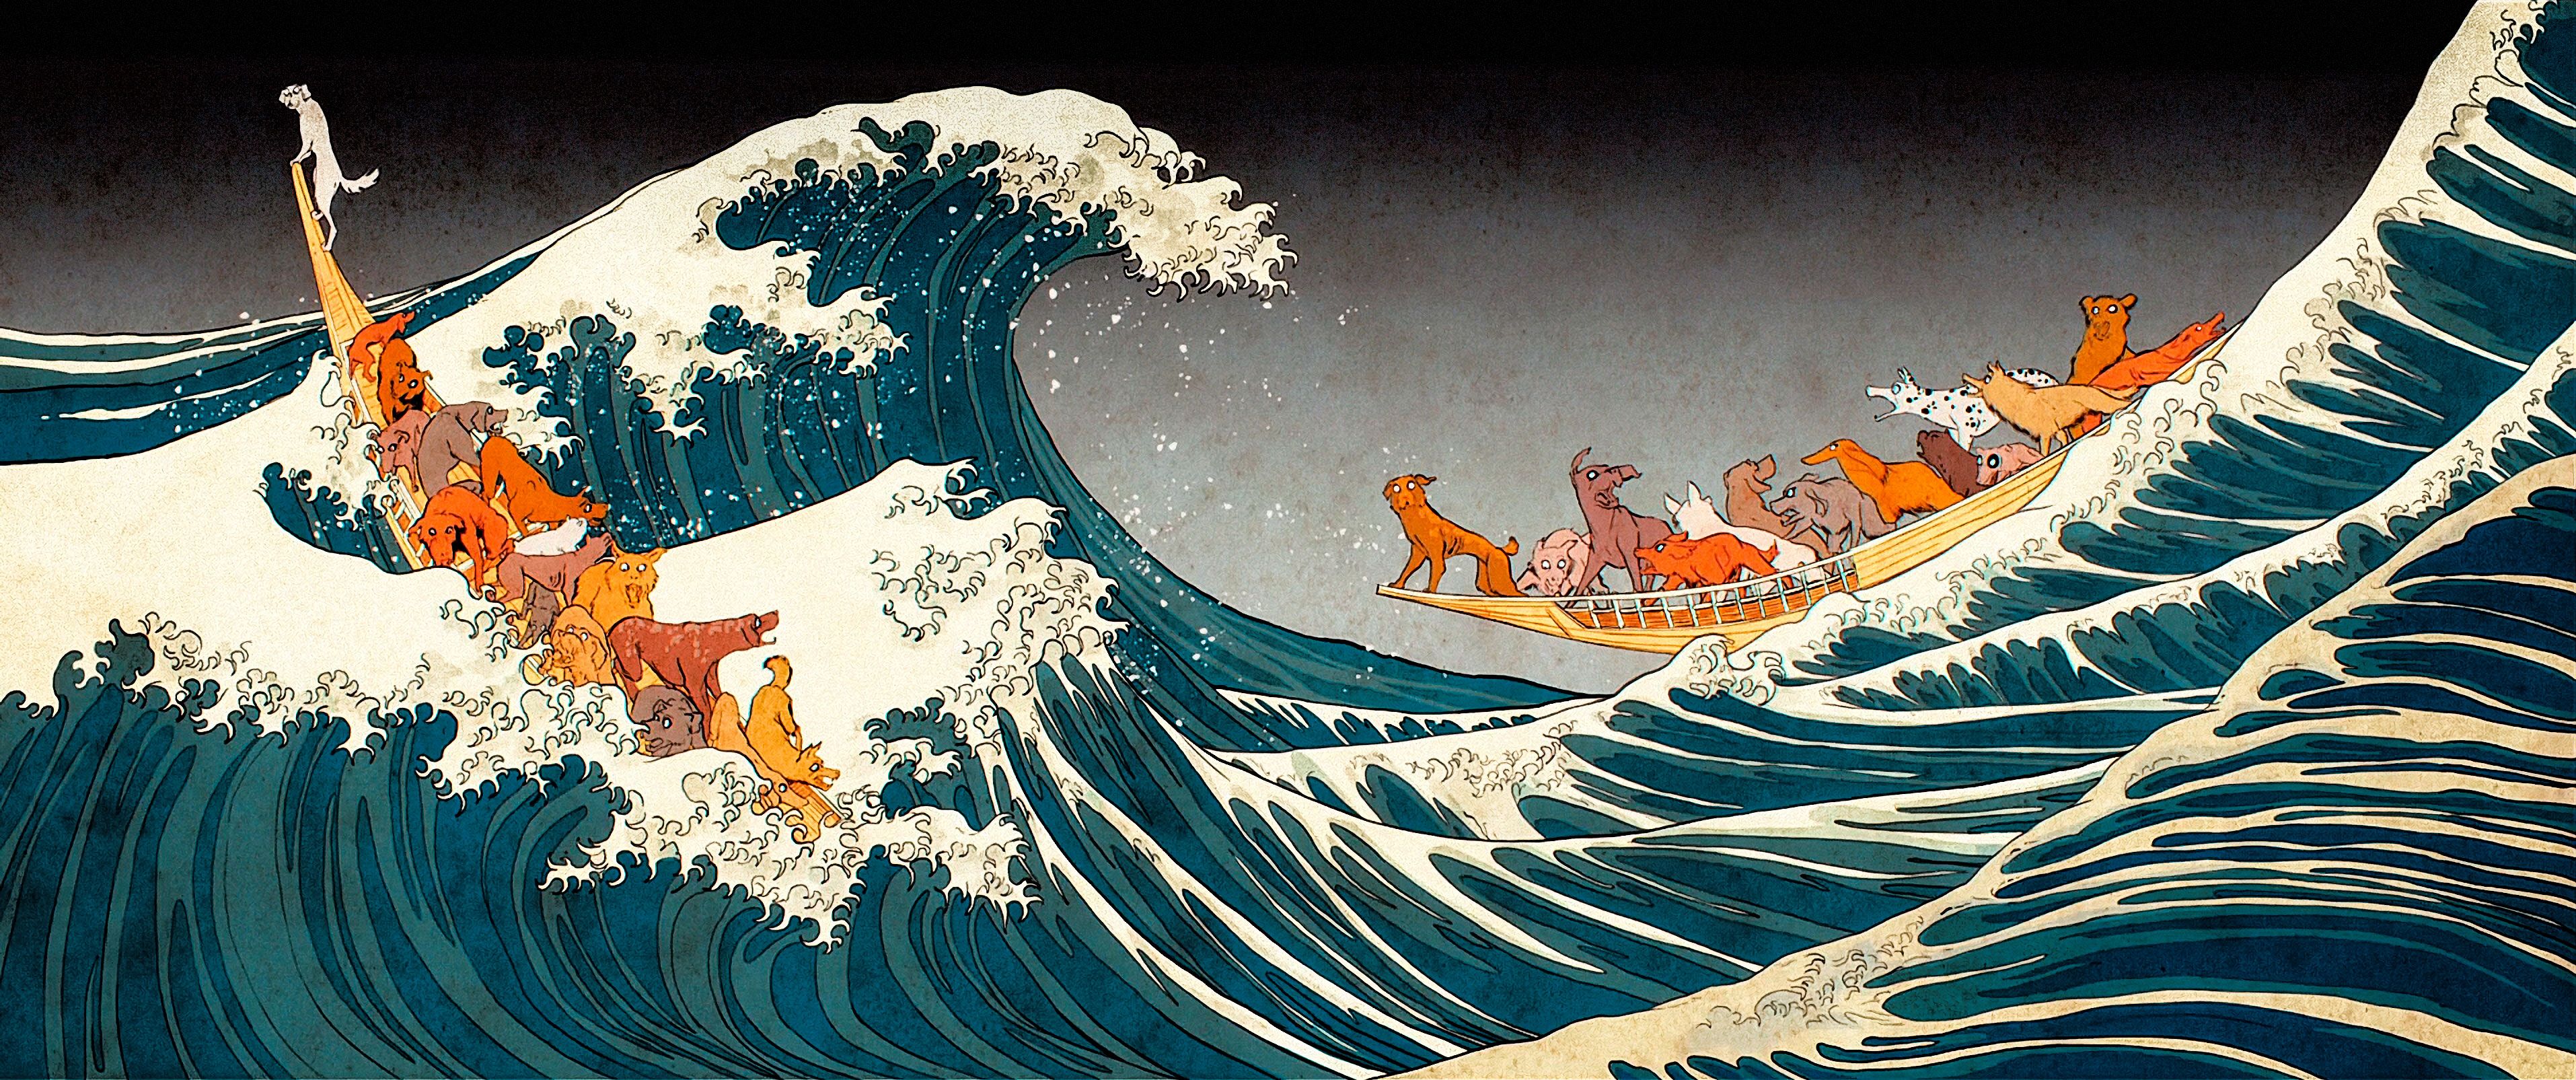 Waves The Great Wave Off Kanagawa Ukiyo E Wallpaper:3829x1605